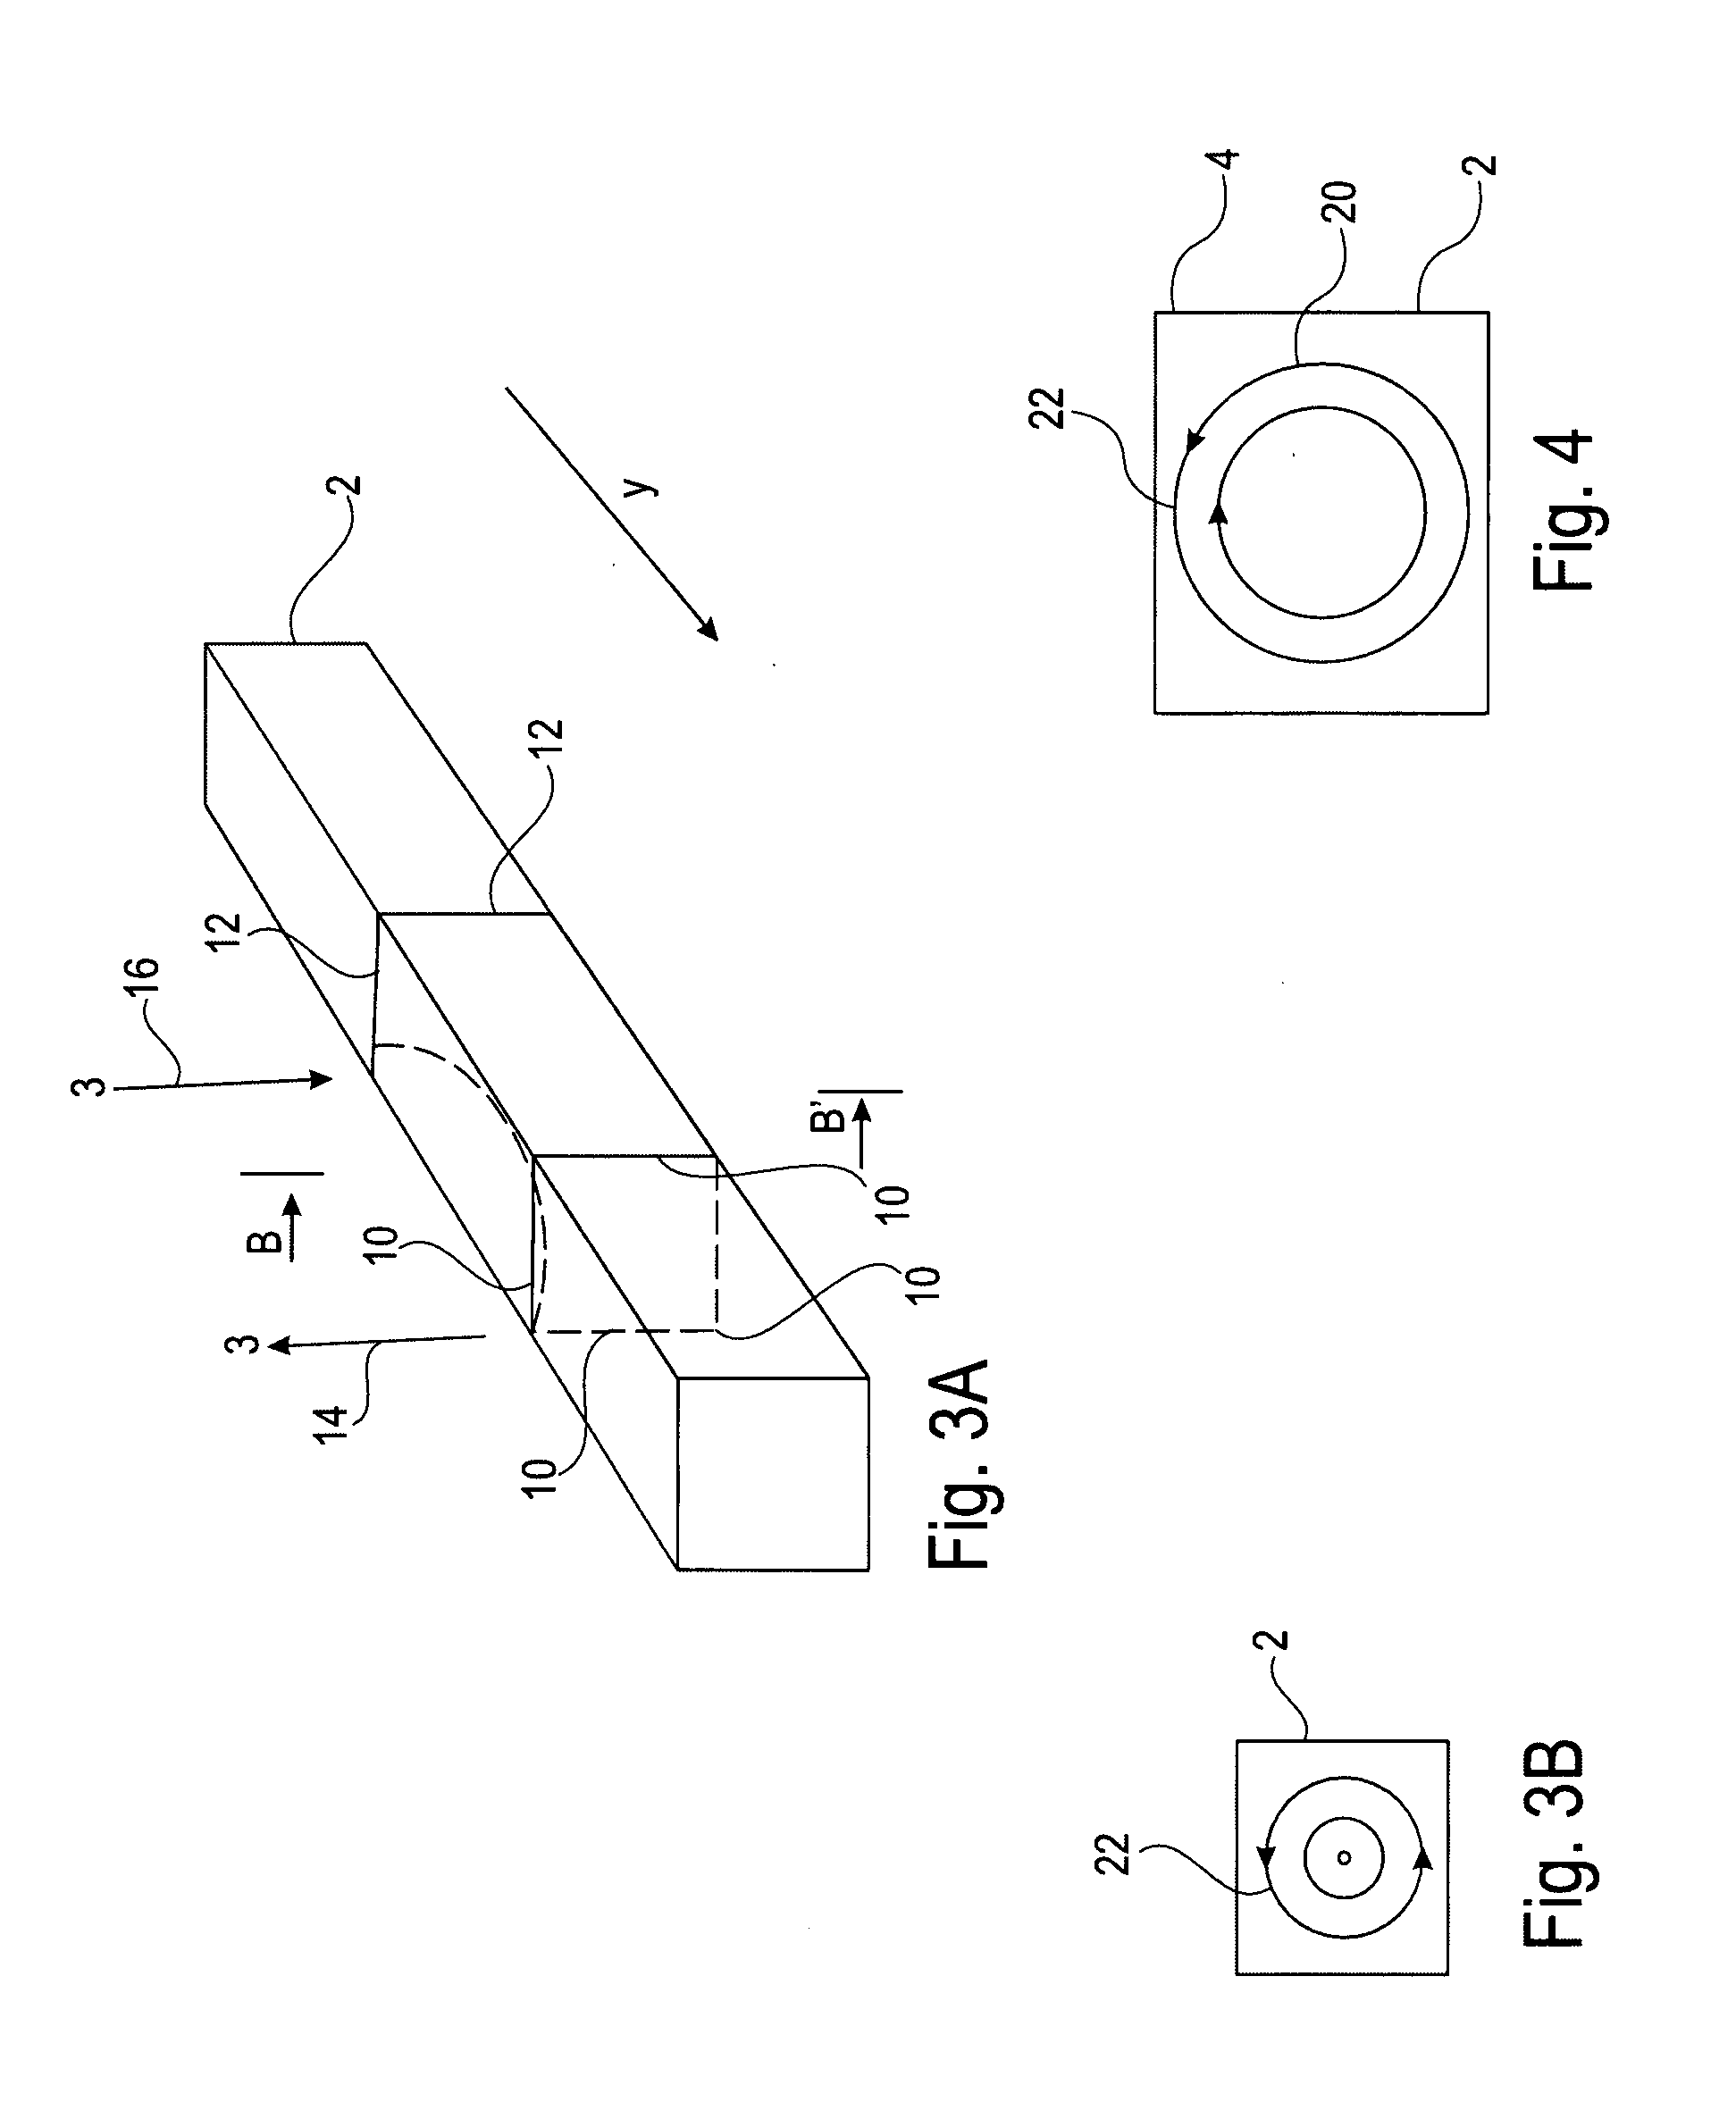 Position Sensor and Washing Machine